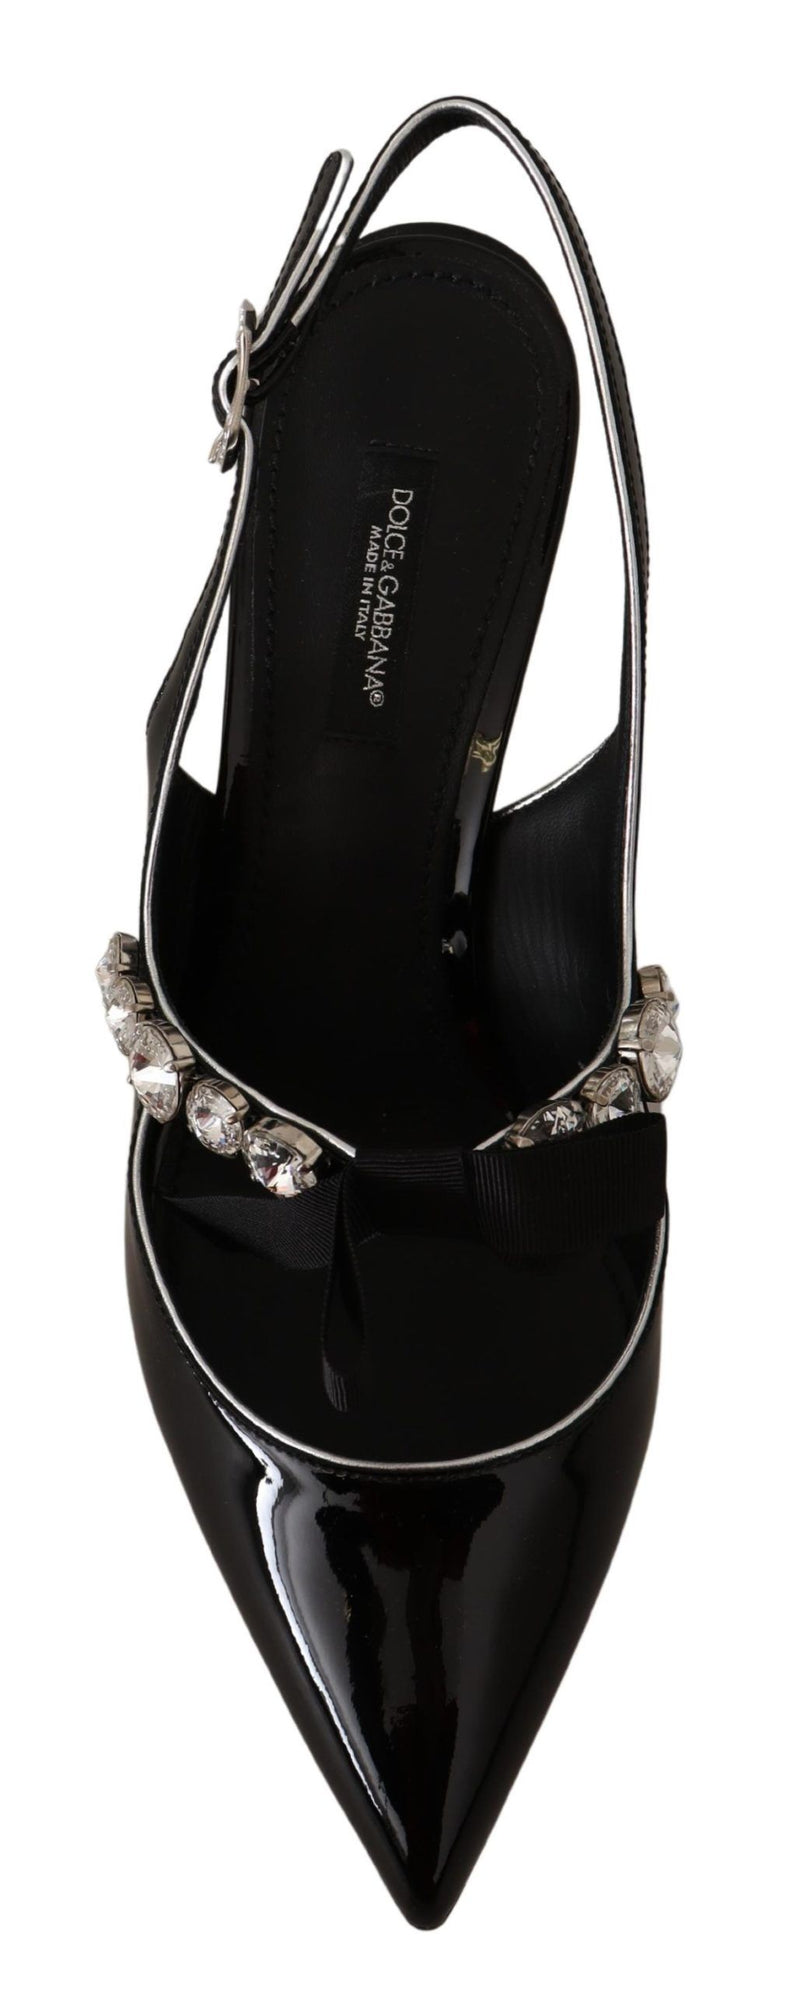 Dolce & Gabbana Black Patent Leather Crystal Slingbacks Women's Shoes